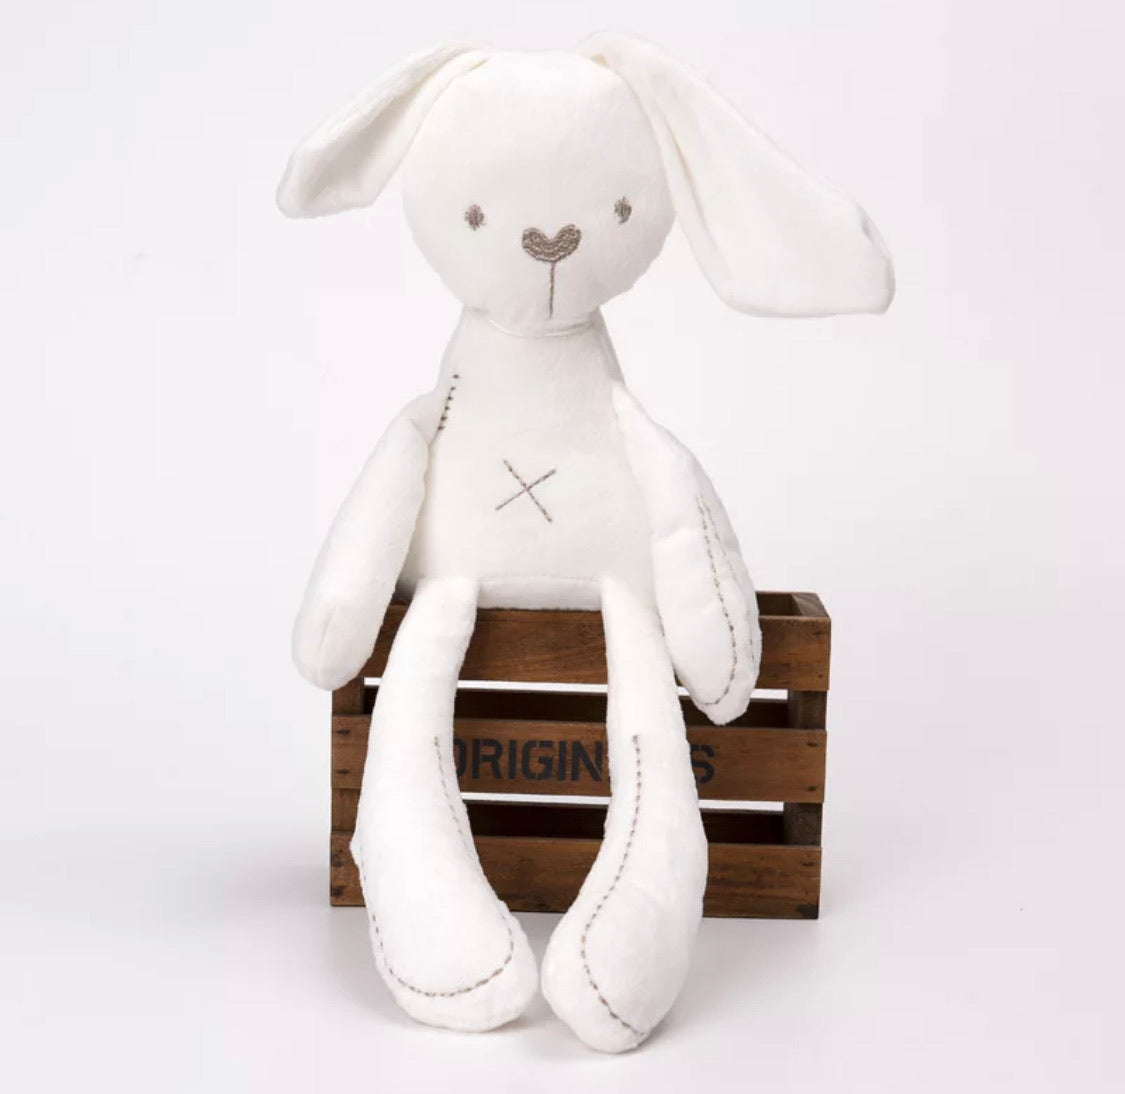 Hello World White Bunny Soft Toy